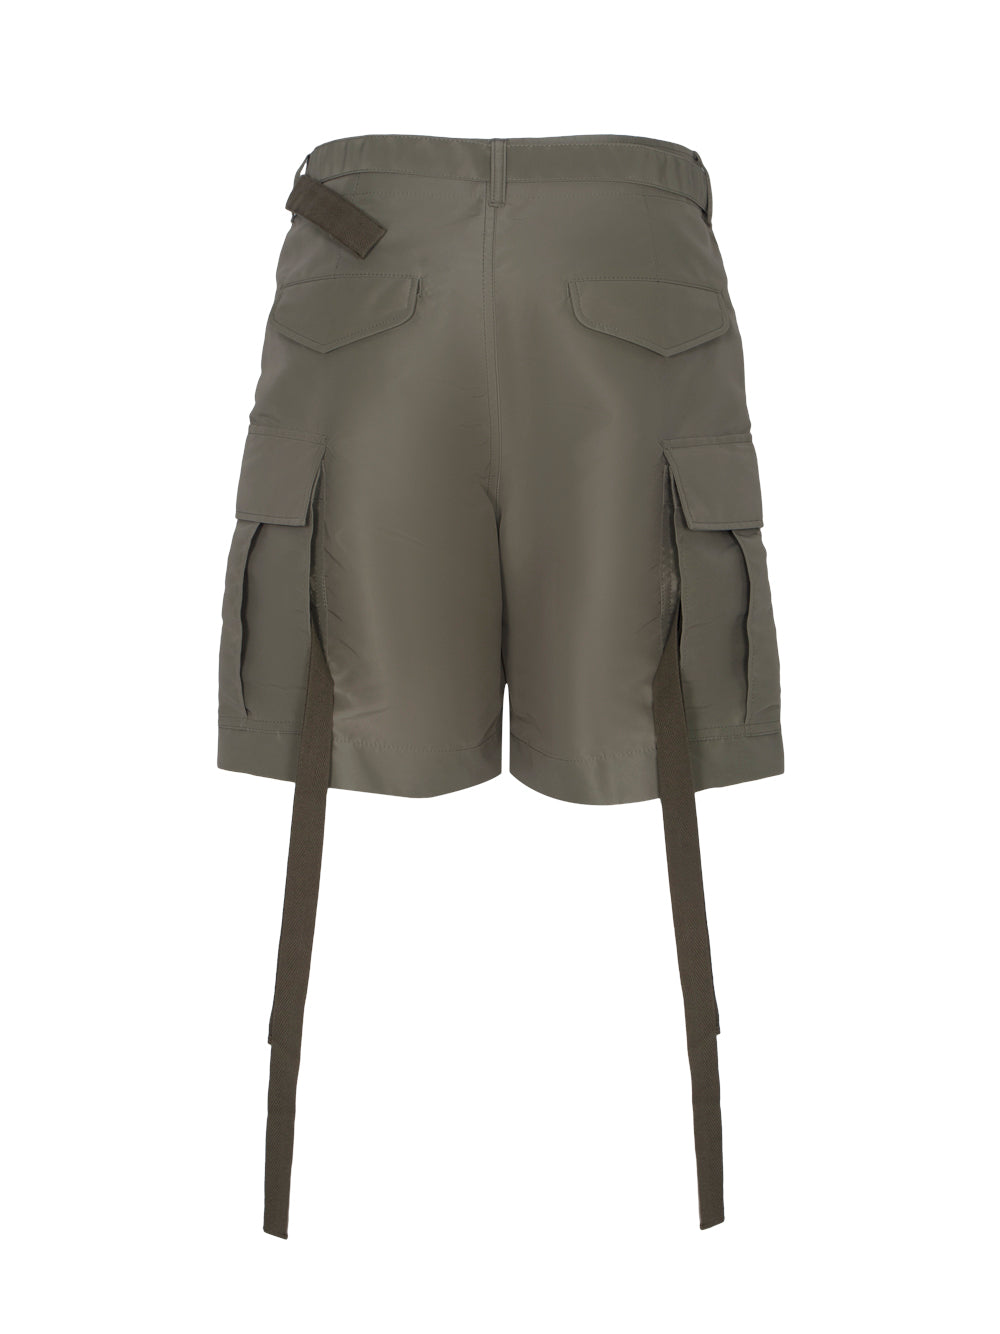 Nylon Twill Shorts (Khaki)